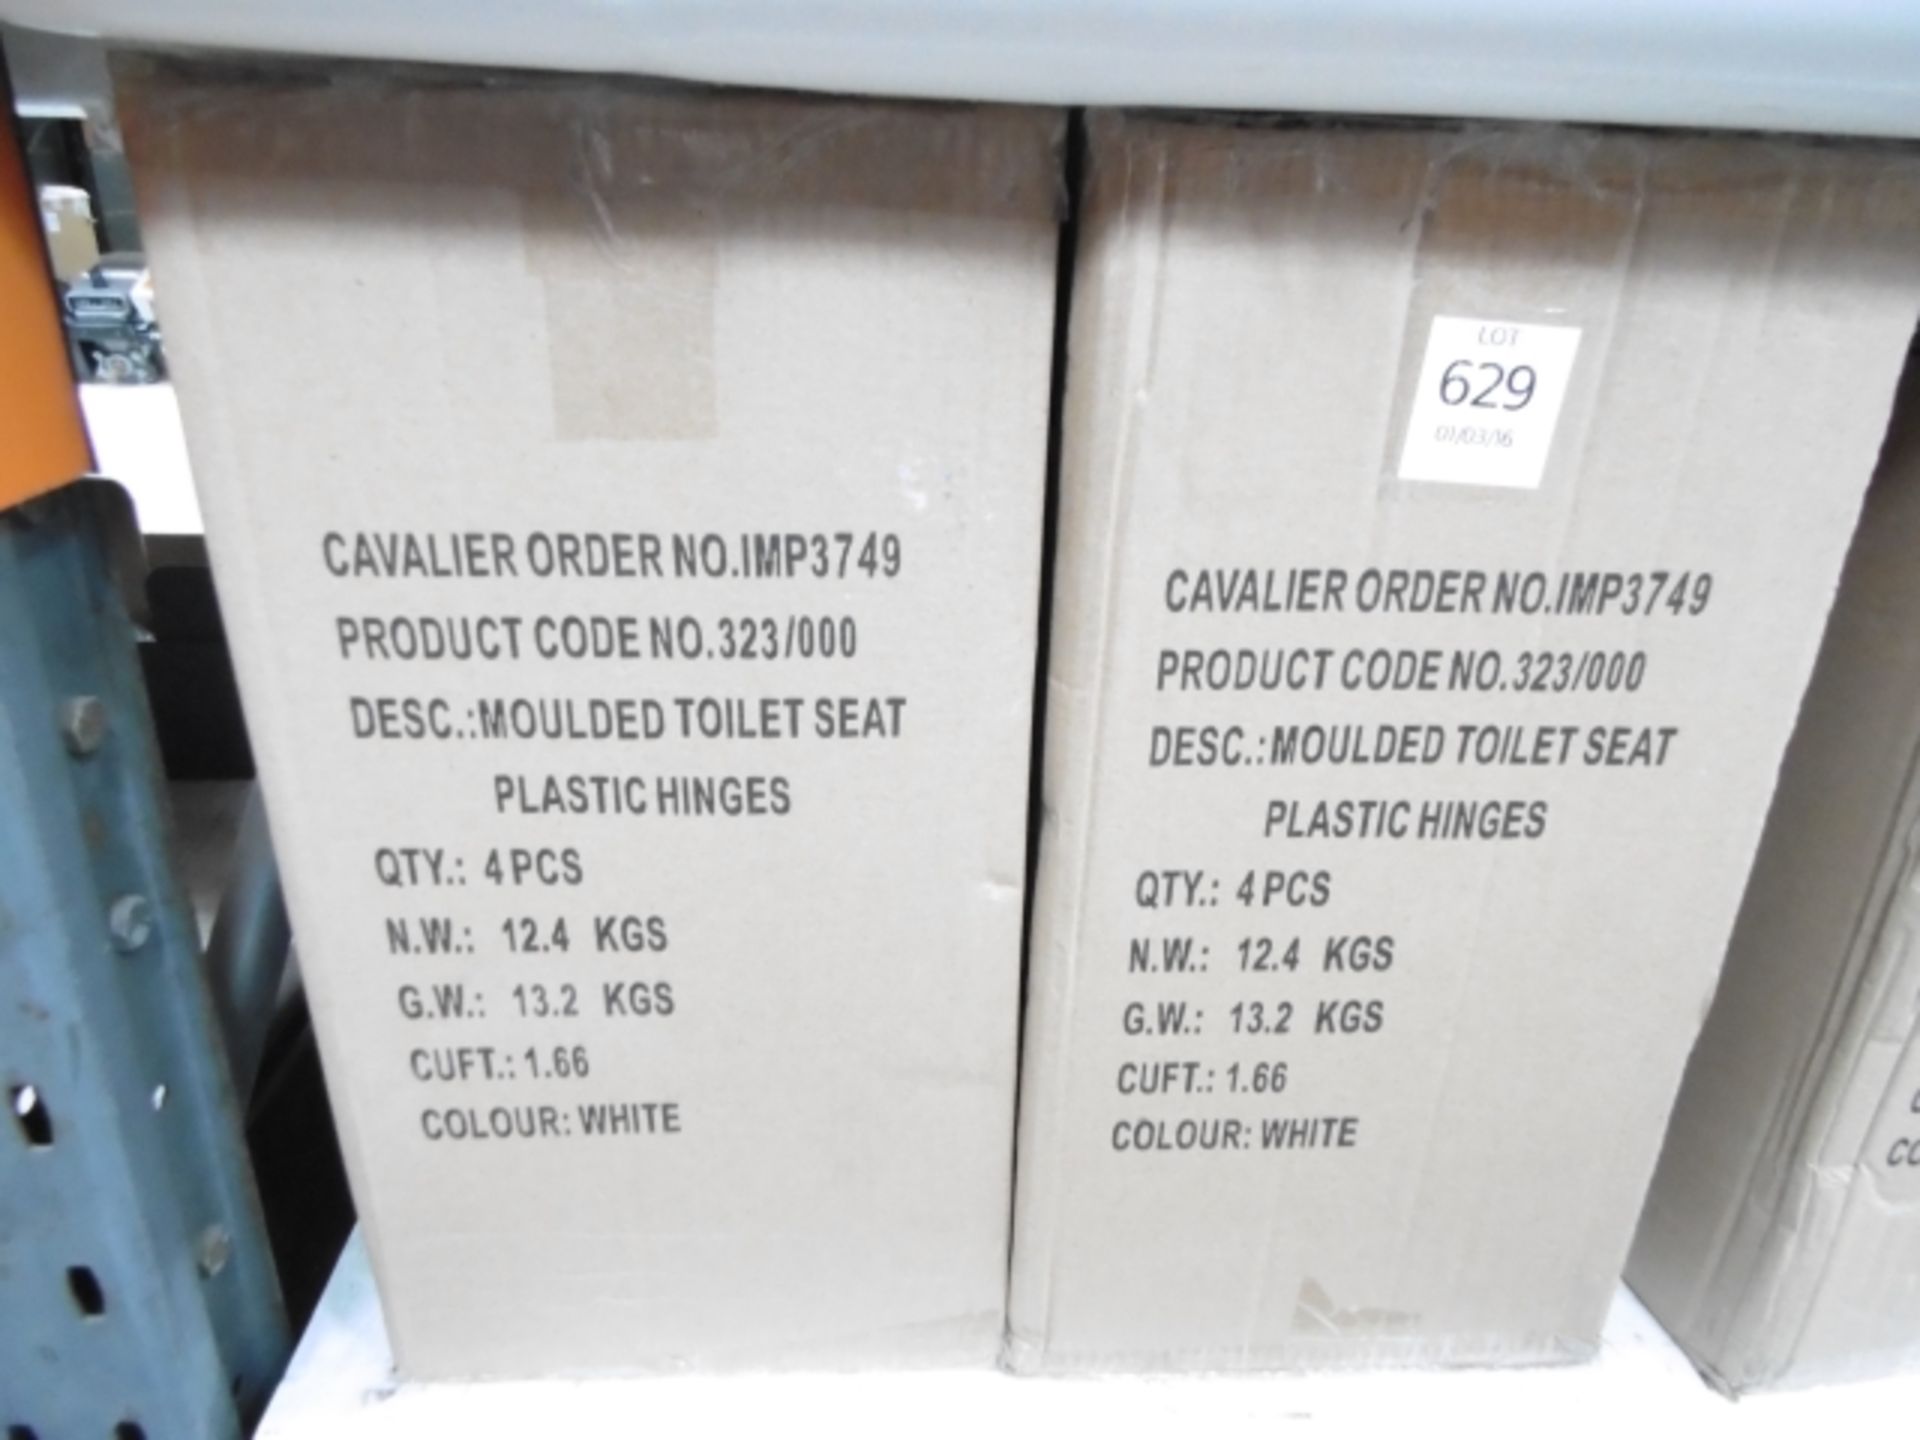 2 x boxes of moulded plastic toilet seats, 4 pieces per box